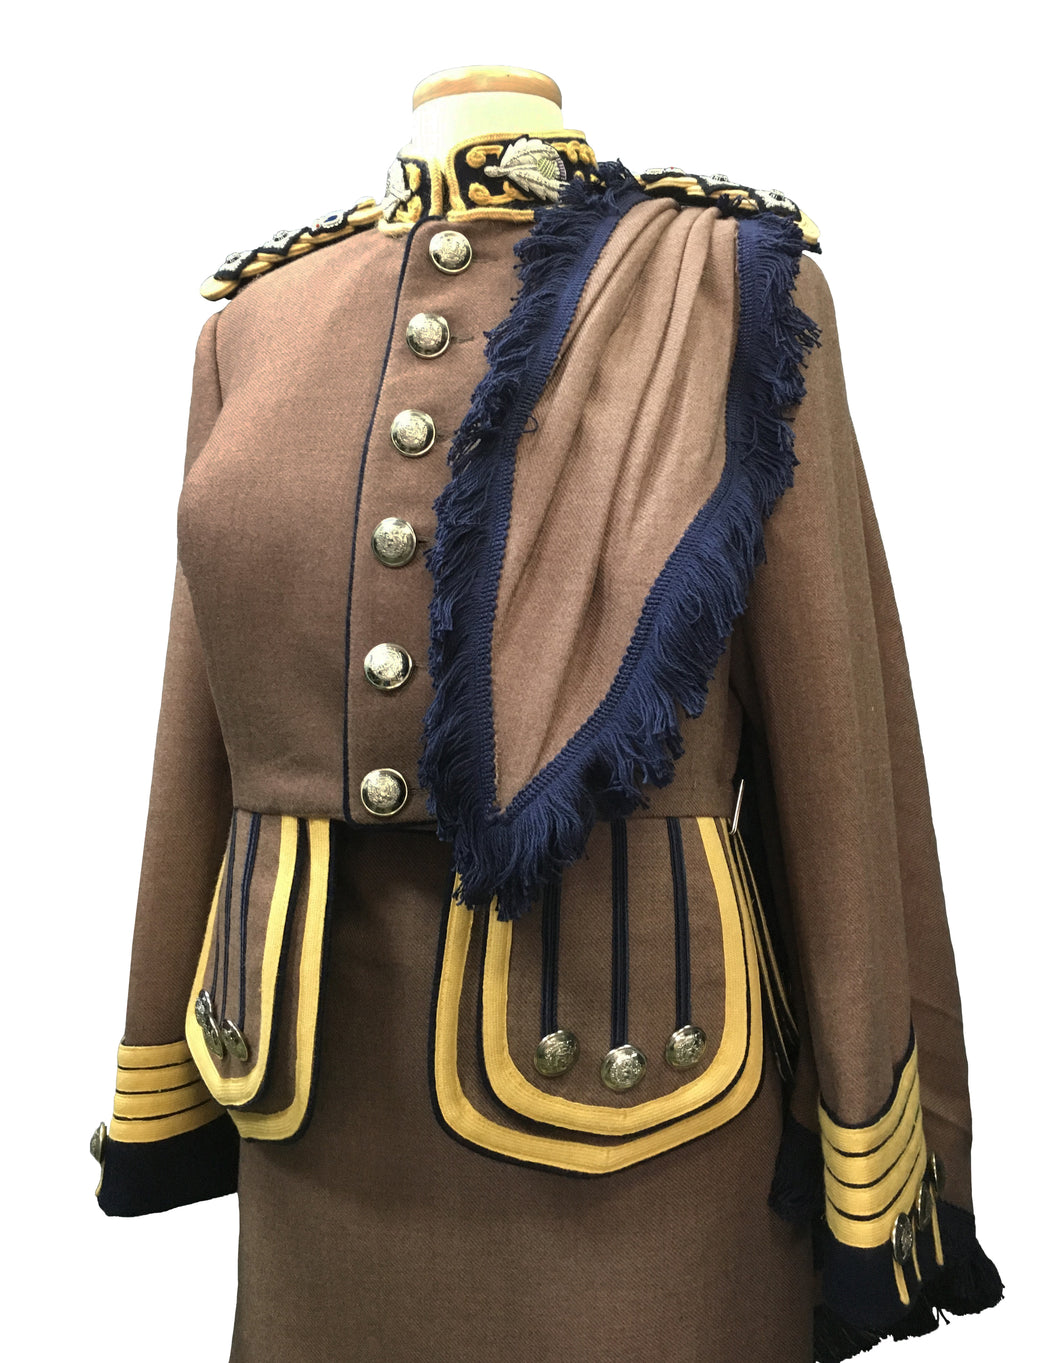 Custom Regiment Jacket